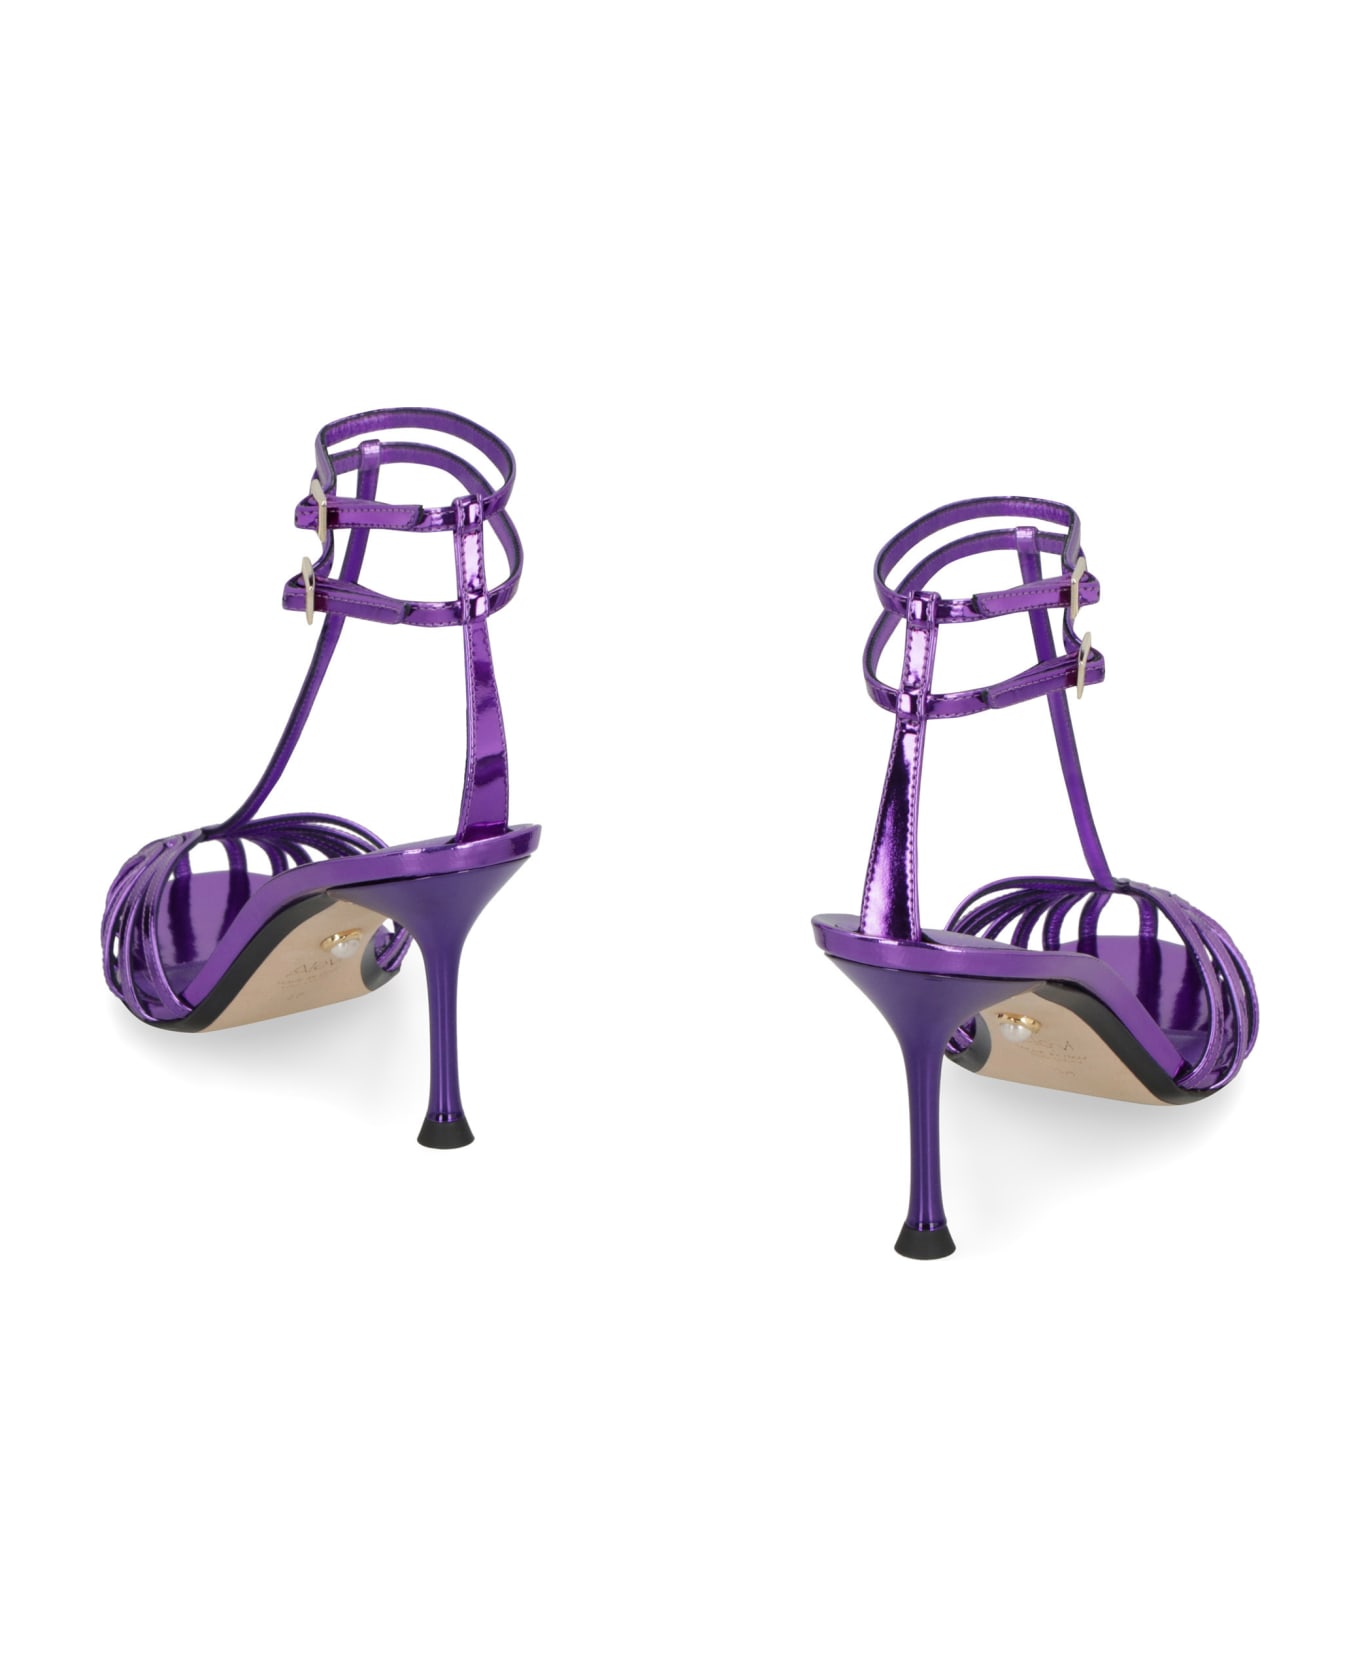 Alevì Jessie Leather Sandals - purple